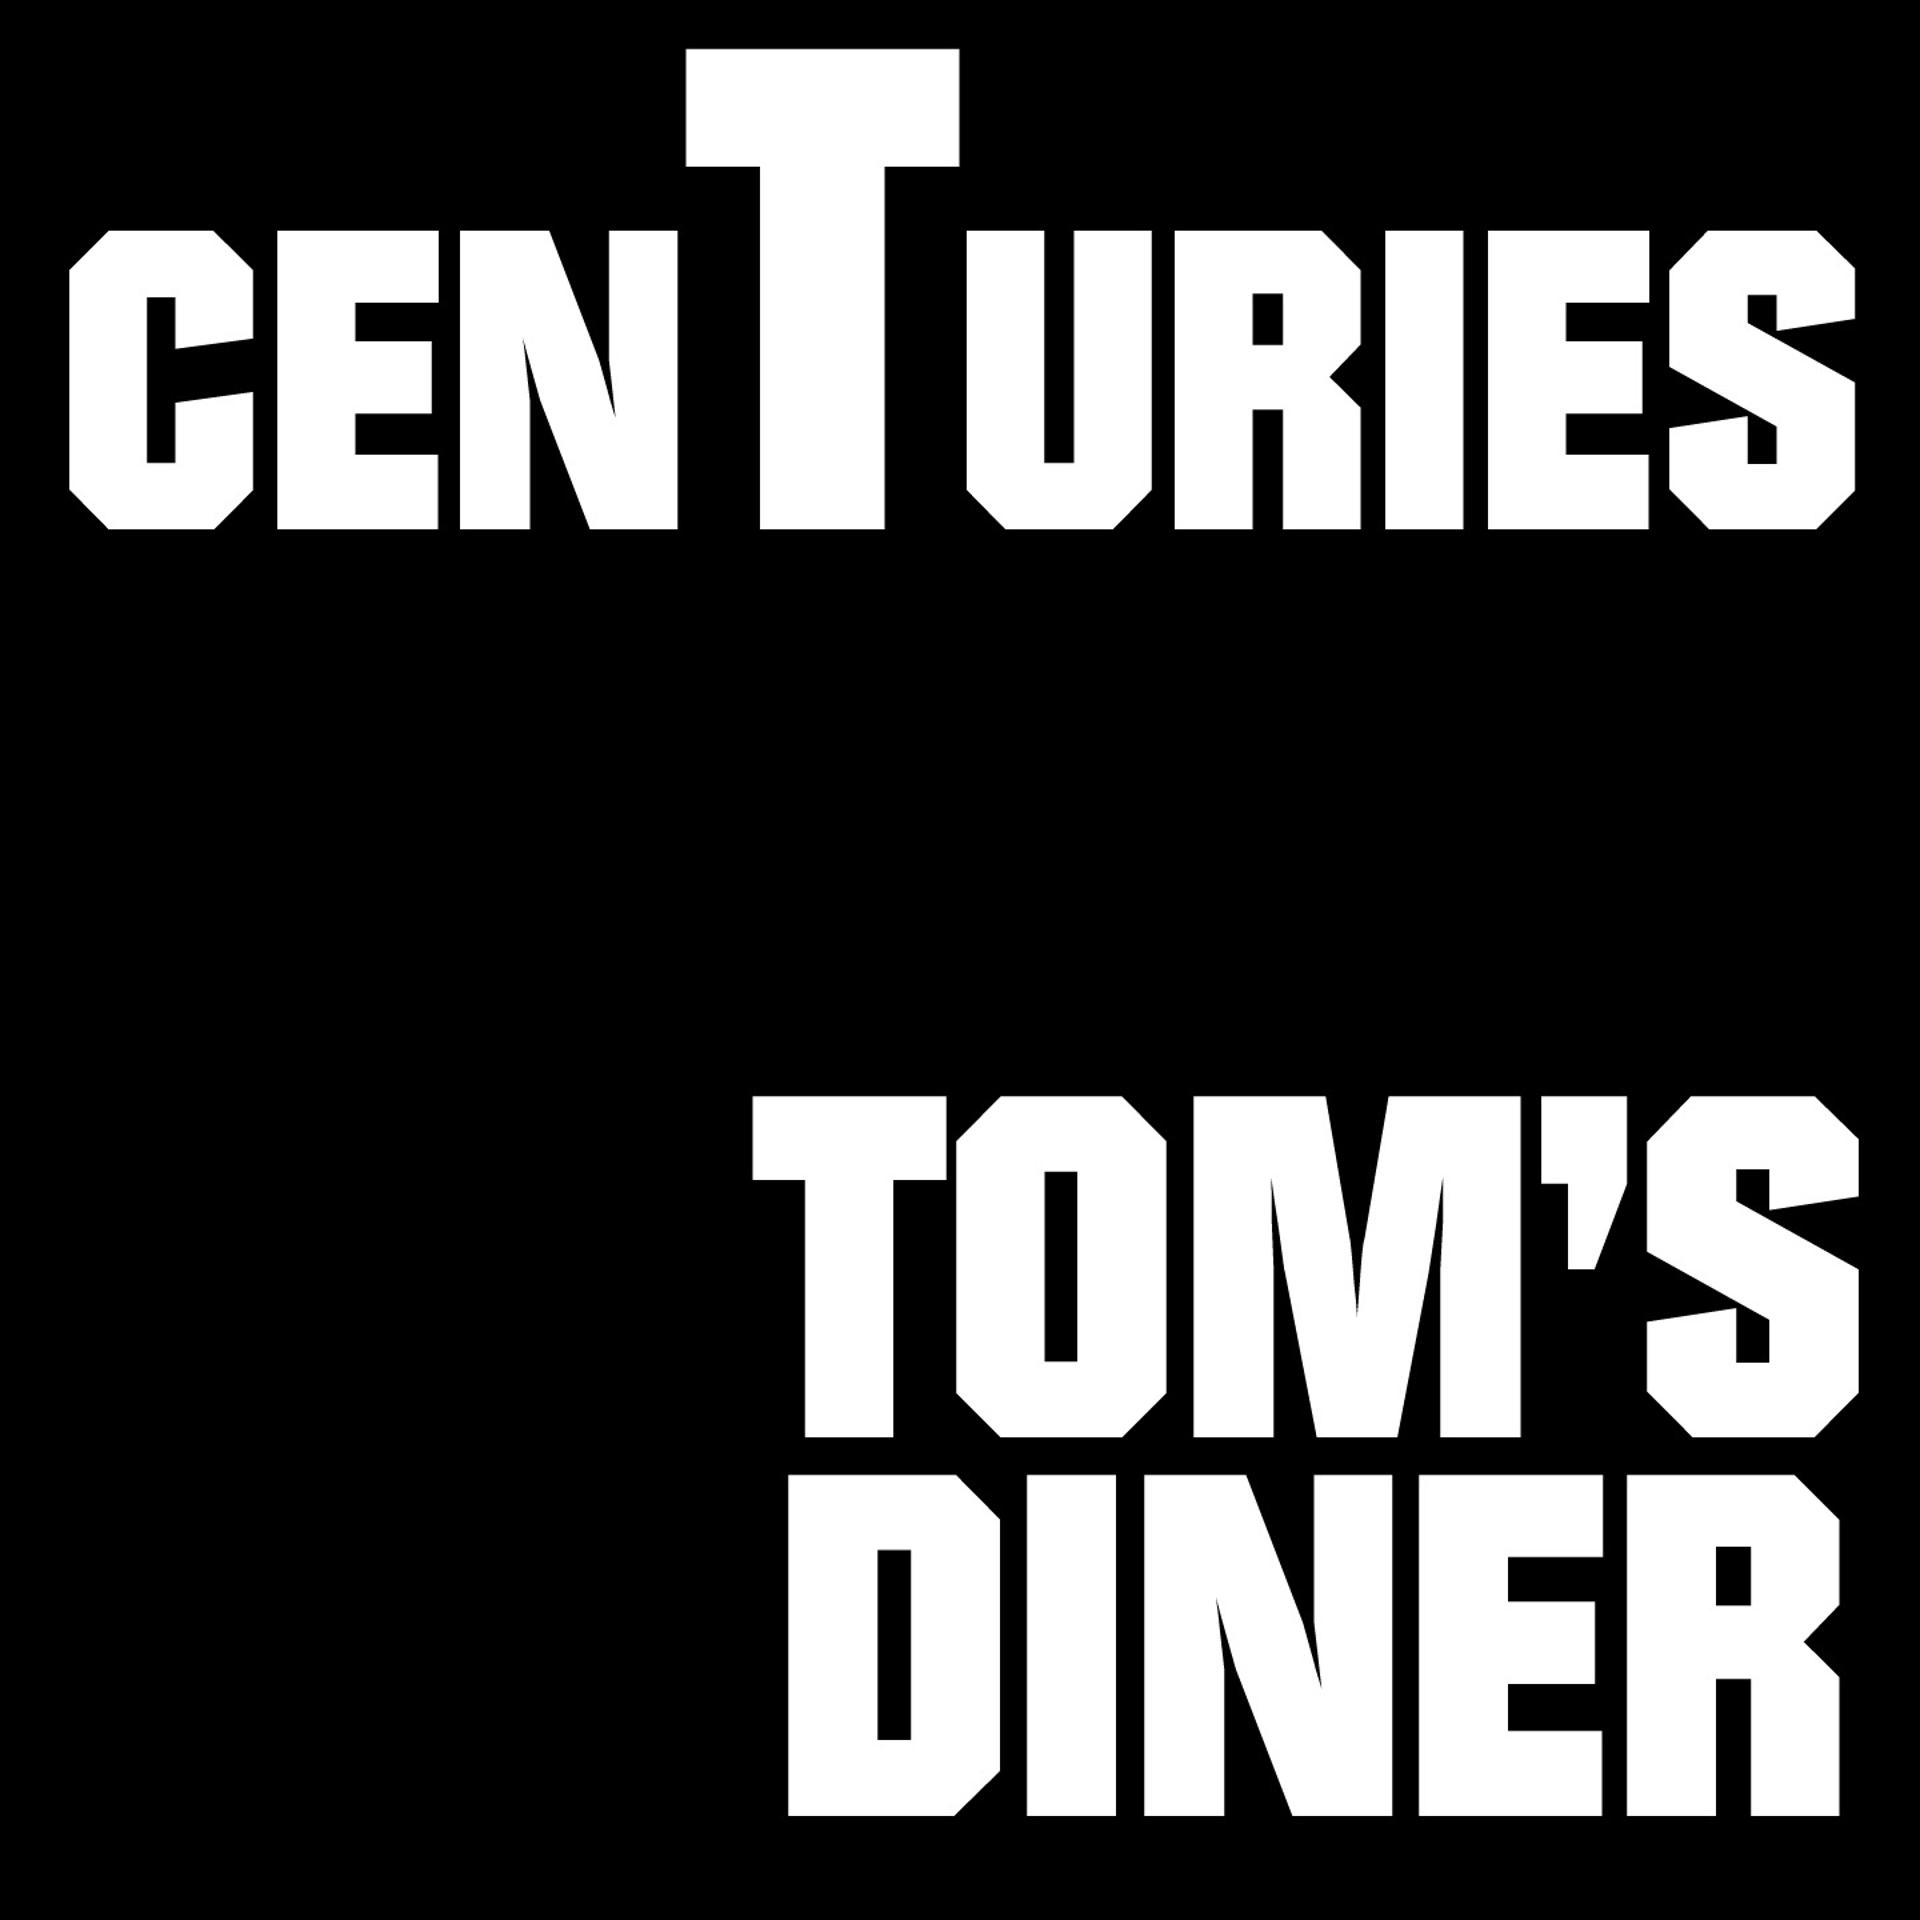 Toms diner текст. Tom's Diner и Centuries. Tom's Diner песня. Томс Динер текст. Томс Динер слушать.